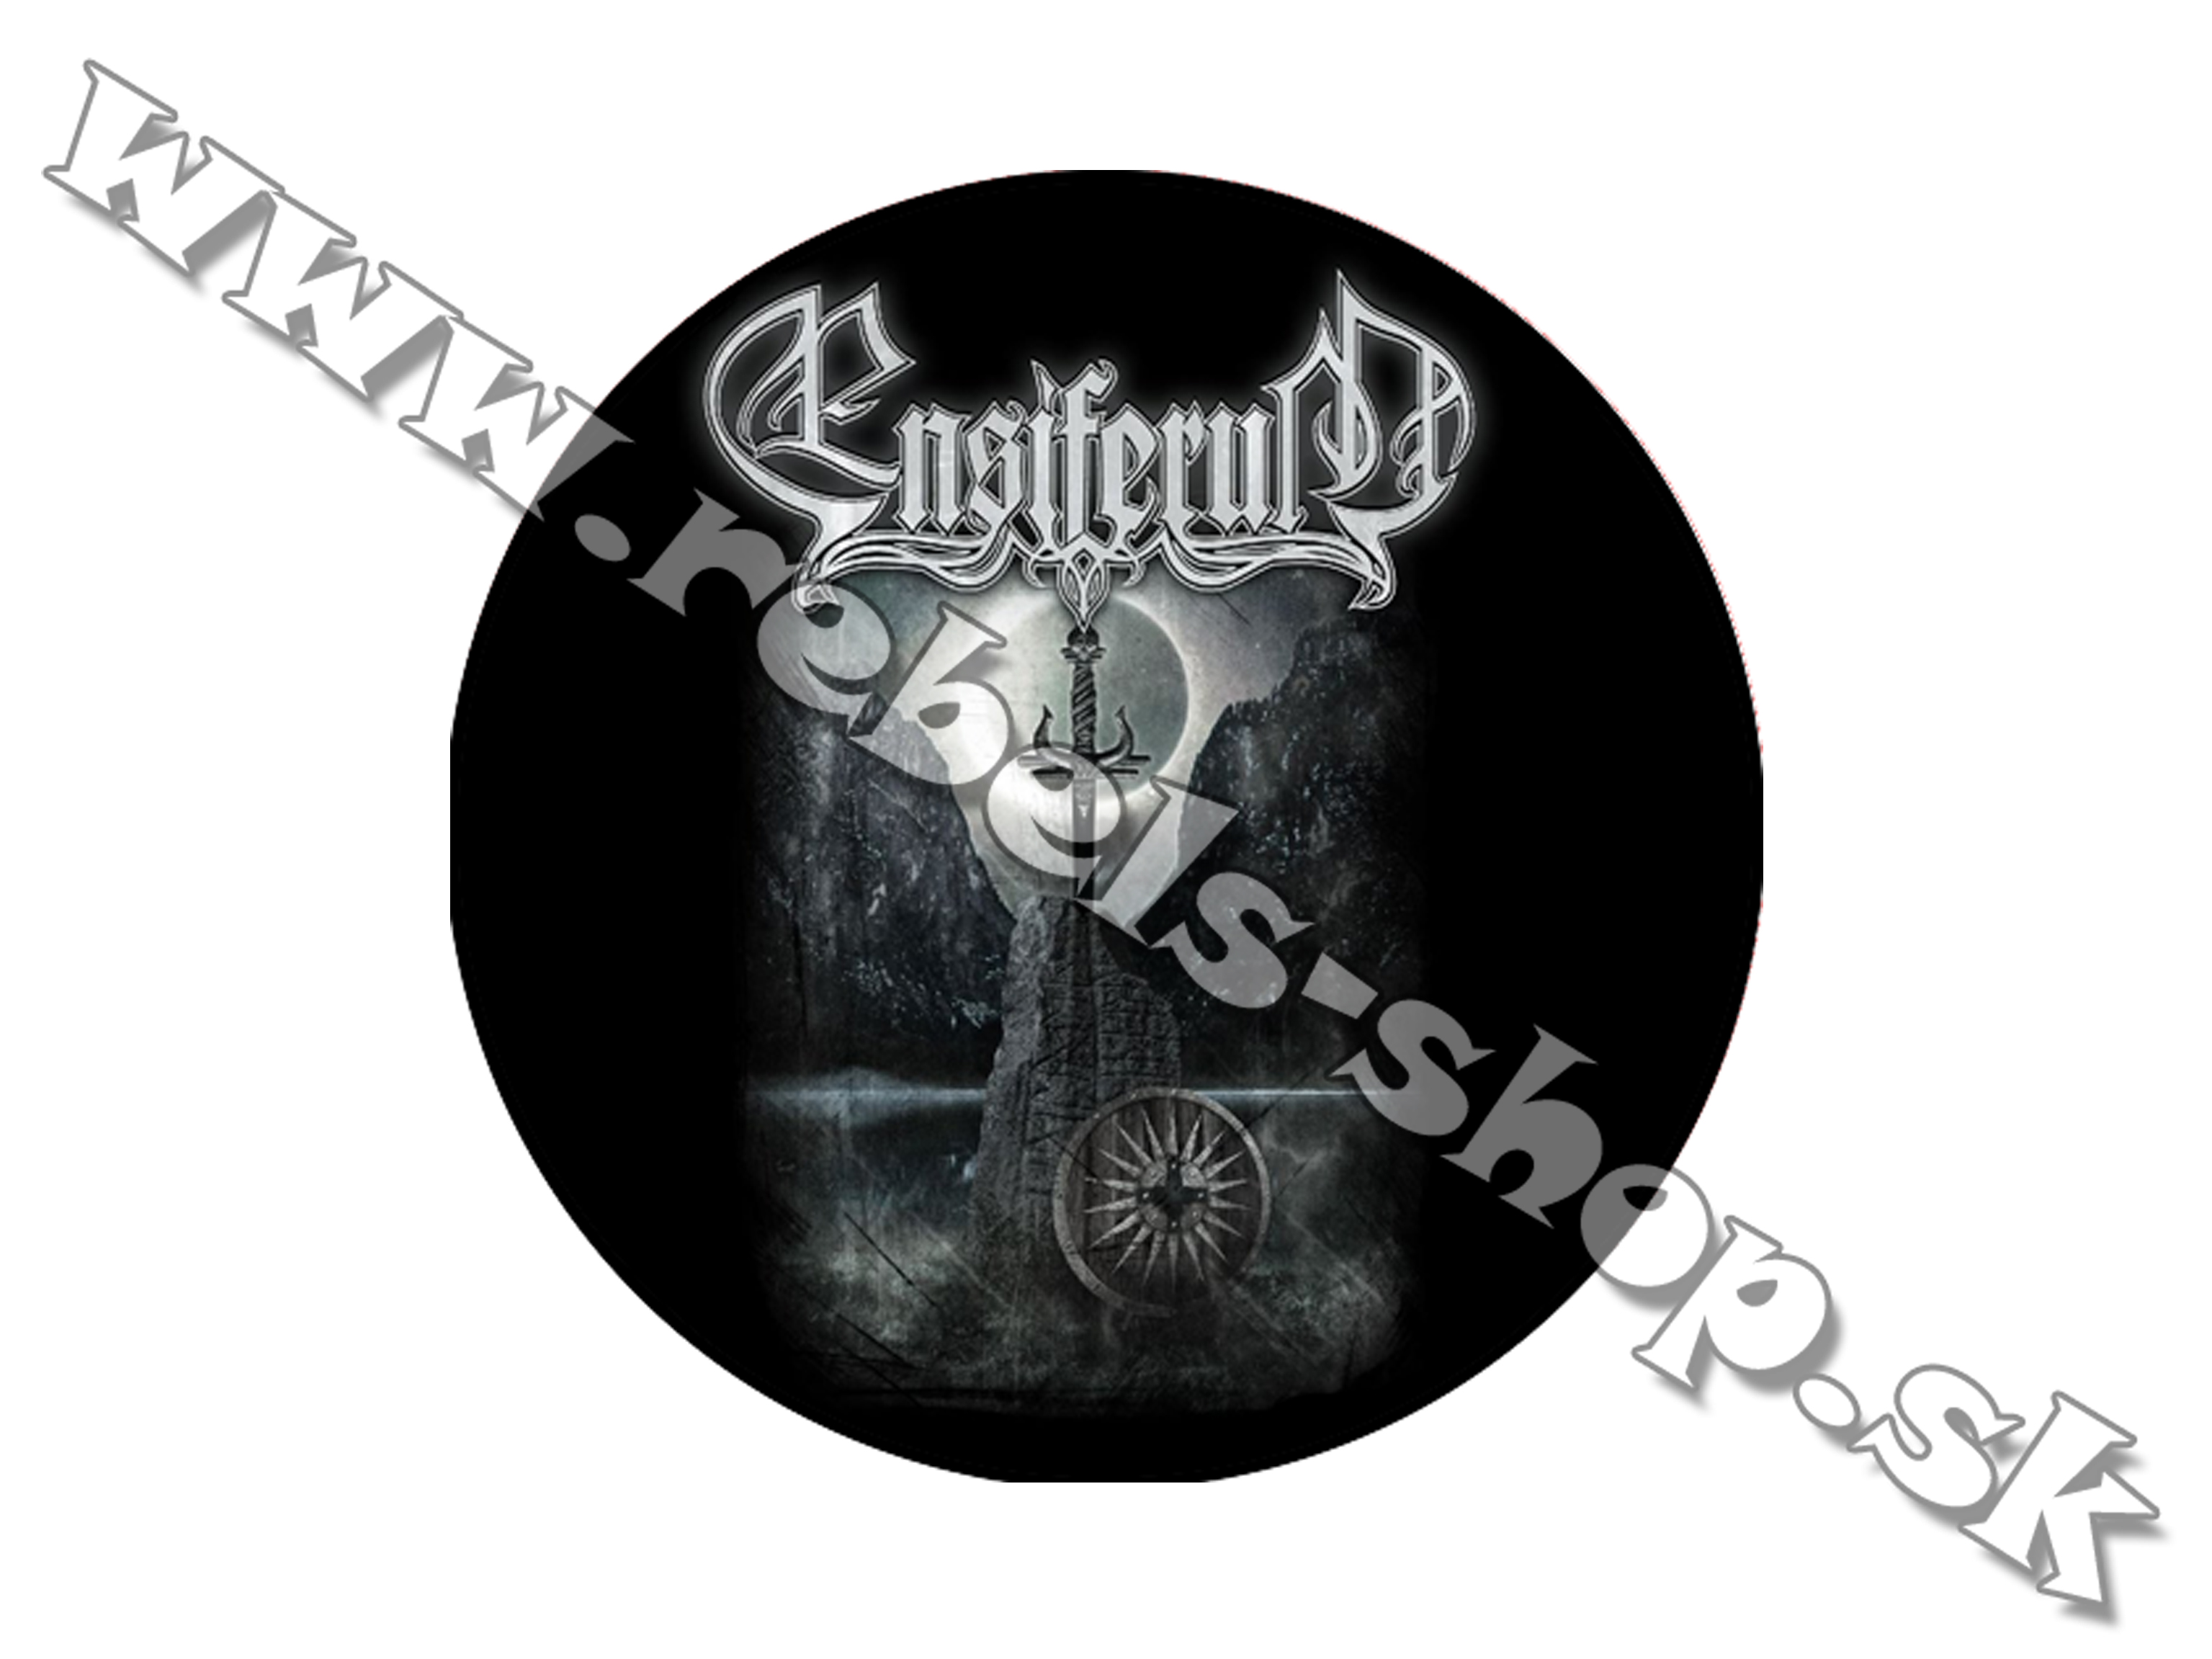 Odznak "Ensiferum"